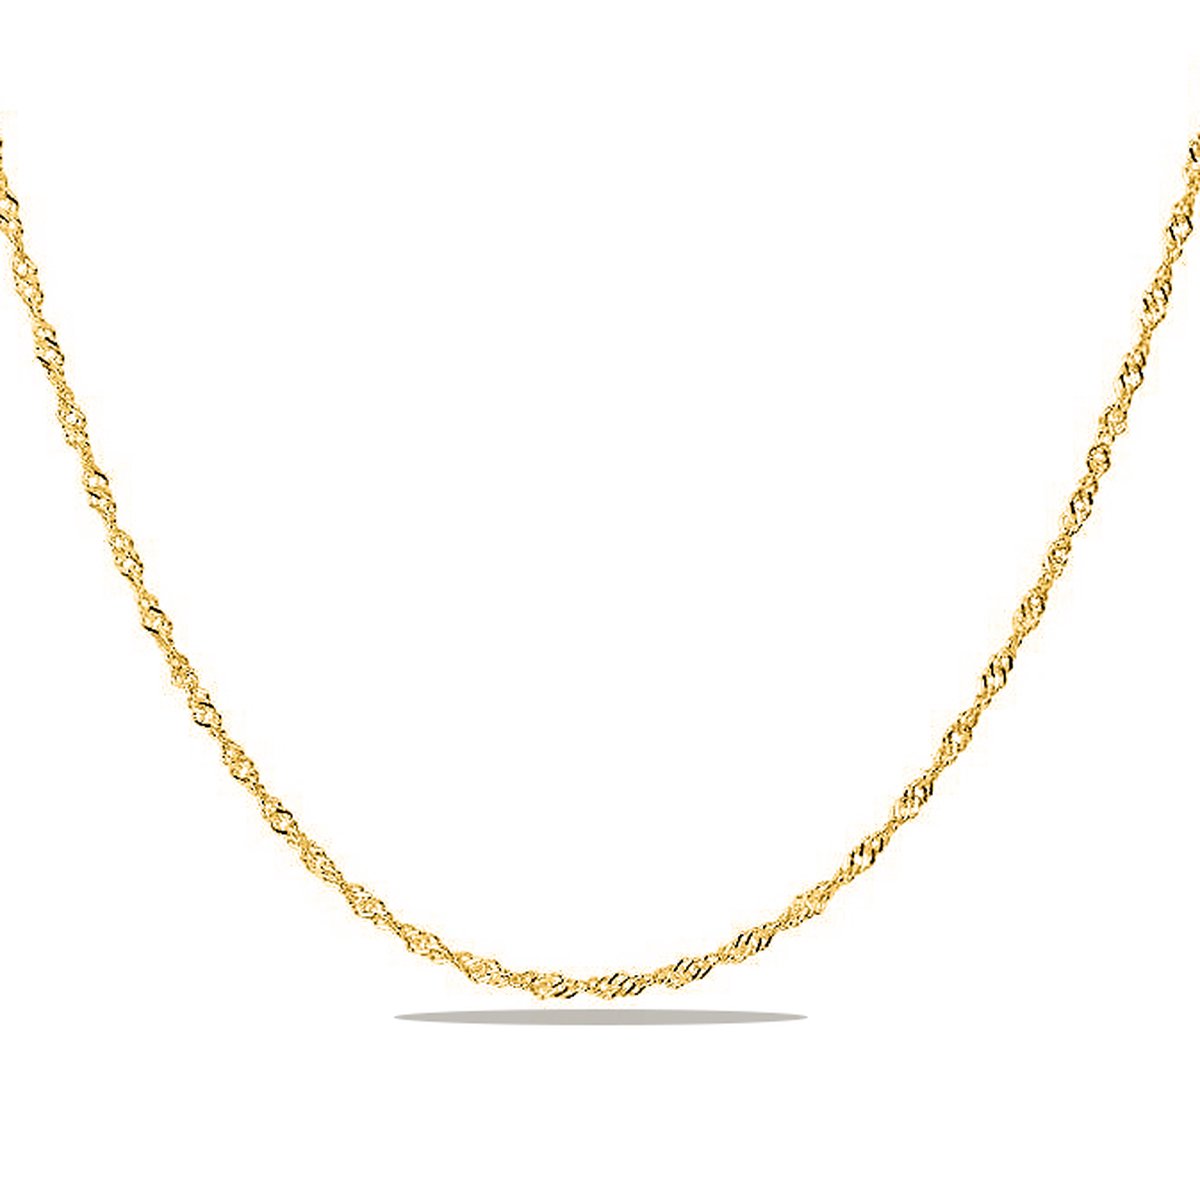 Juwelier Zwartevalk 14 karaat gouden singapore schakel ketting - sing-1.8/42cm